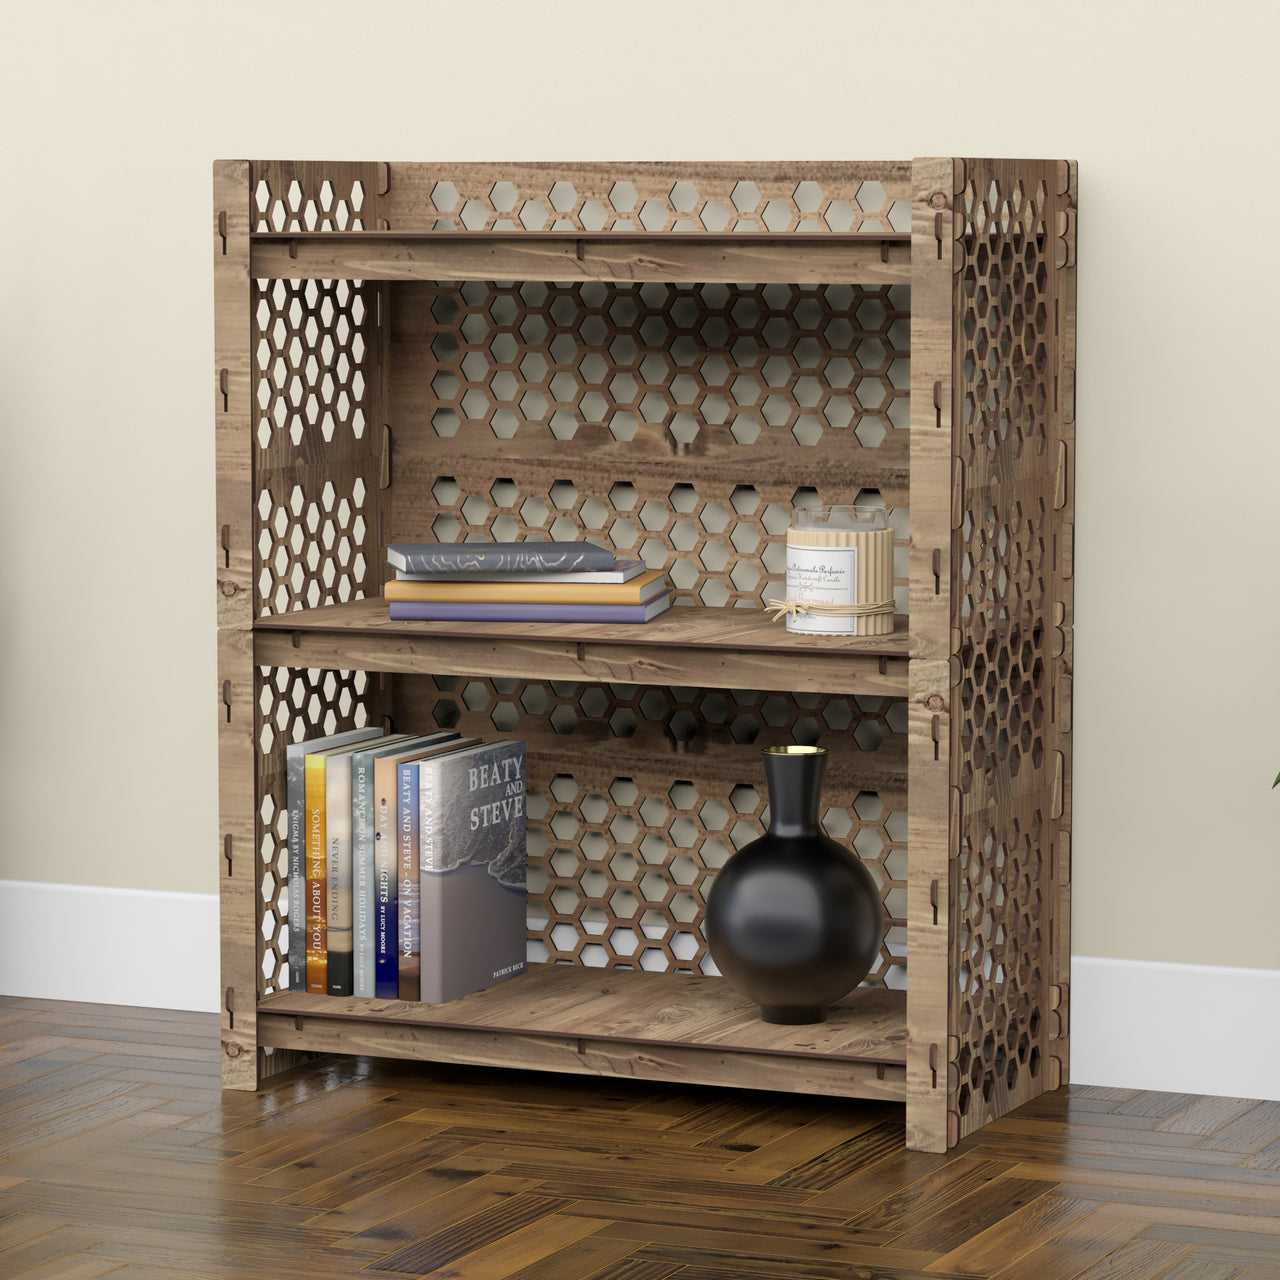 Honeycomb-S LUX 3-tier Bookshelf Bookcase Shelving Unit